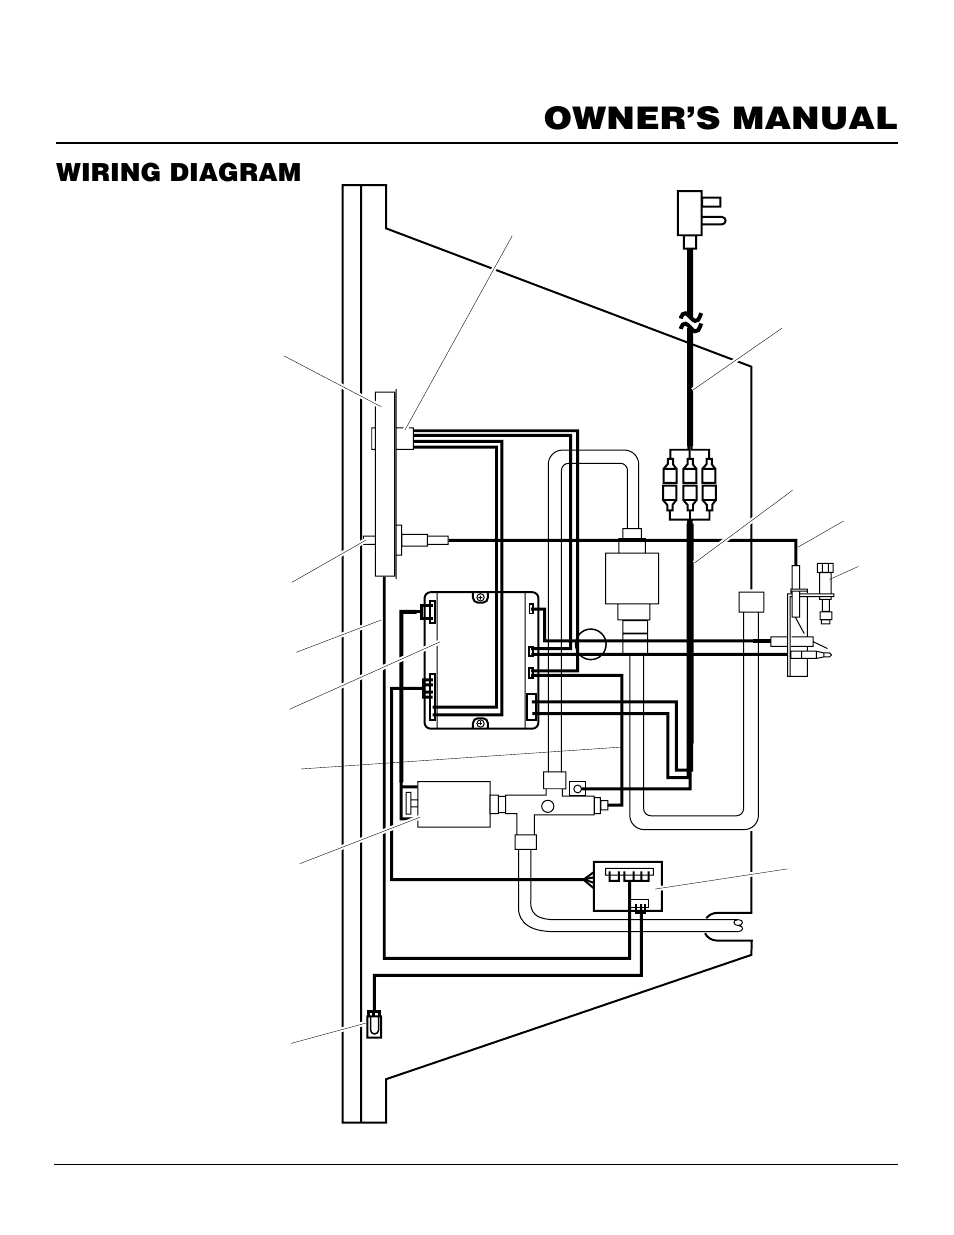 Owner U2019s Manual  Wiring Diagram